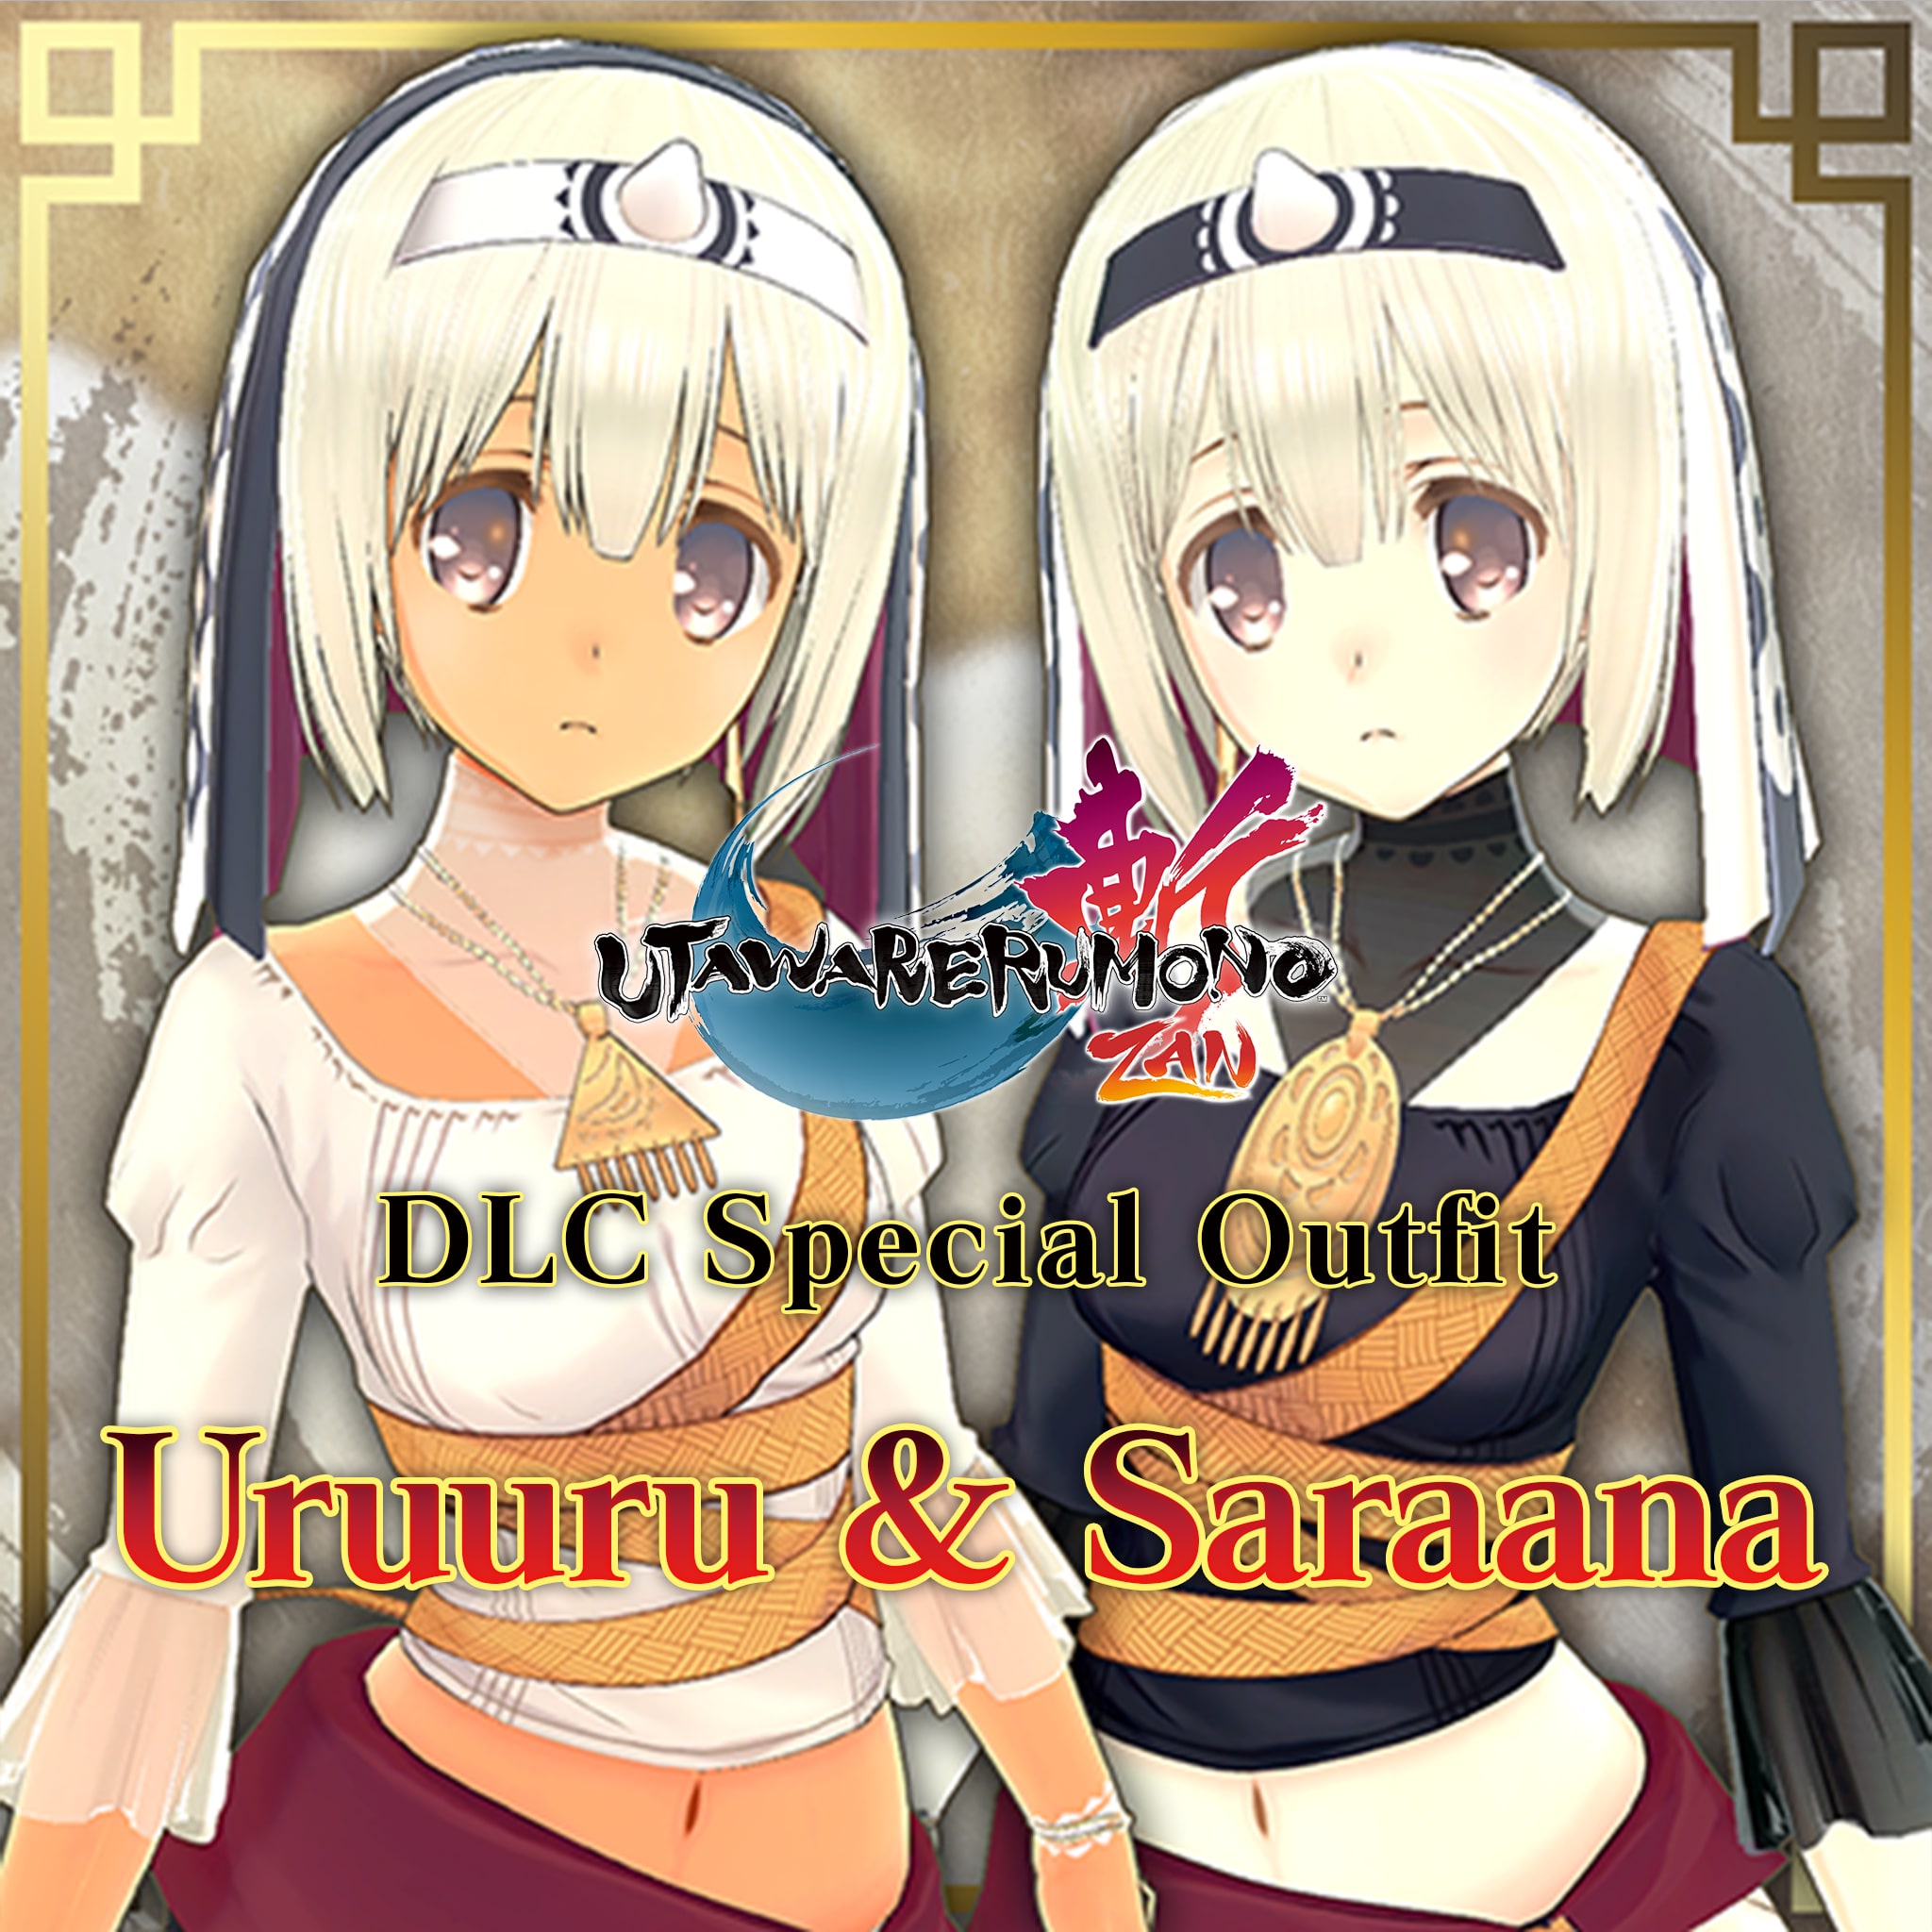 Utawarerumono: ZAN Special Outfit - Uruuru & Saraana